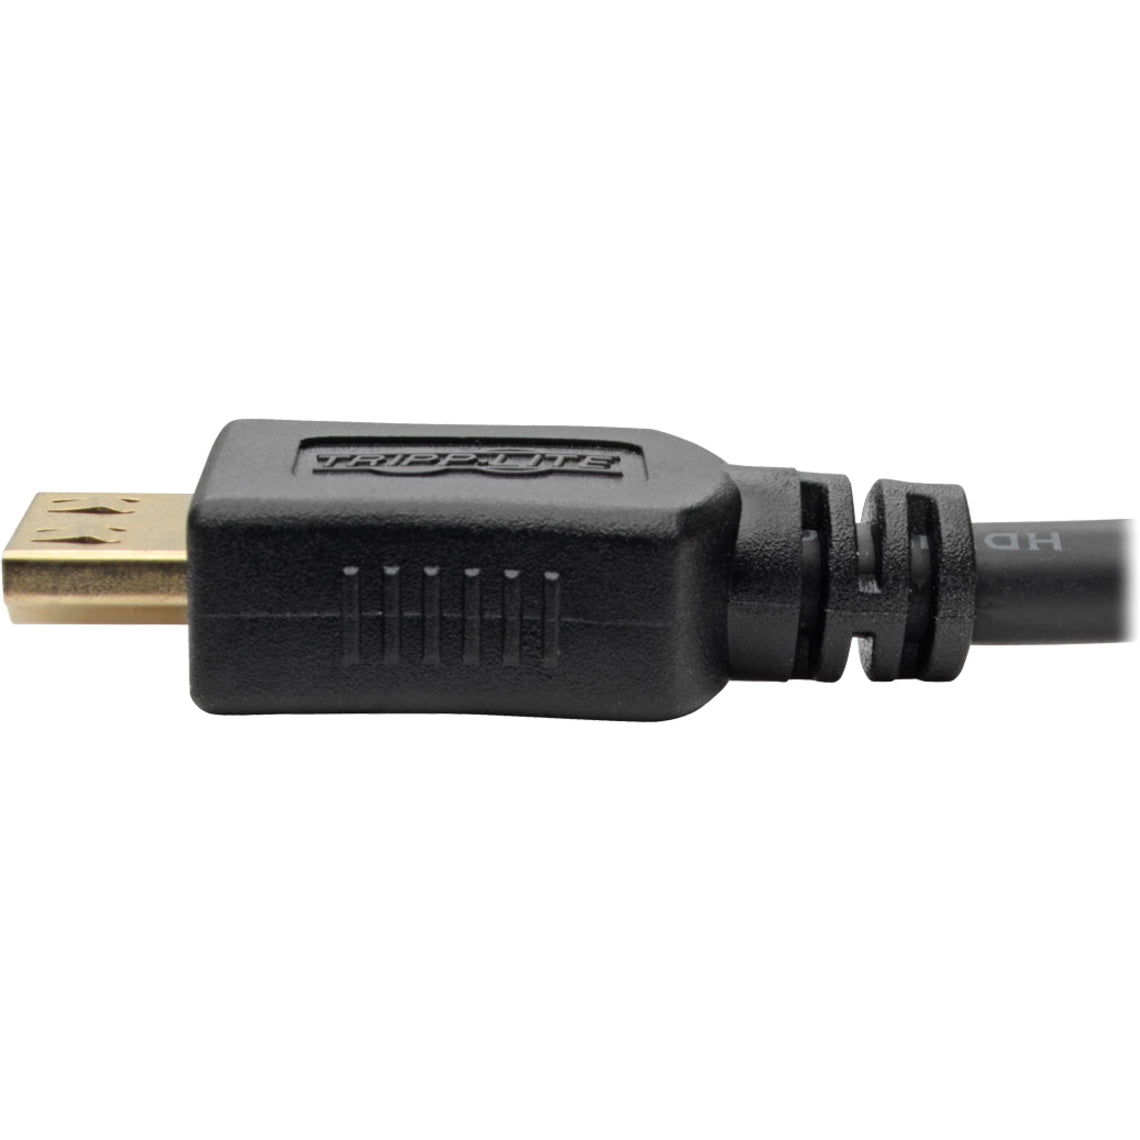 Tripp Lite B123-001 HDMI Active Extender Cable 1ft Copper Conductor TAA Compliant Taiwan Origin トリップライト B123-001 HDMI アクティブエクステンダーケーブル、1ft、銅コンダクター、TAA準拠、台湾原産地